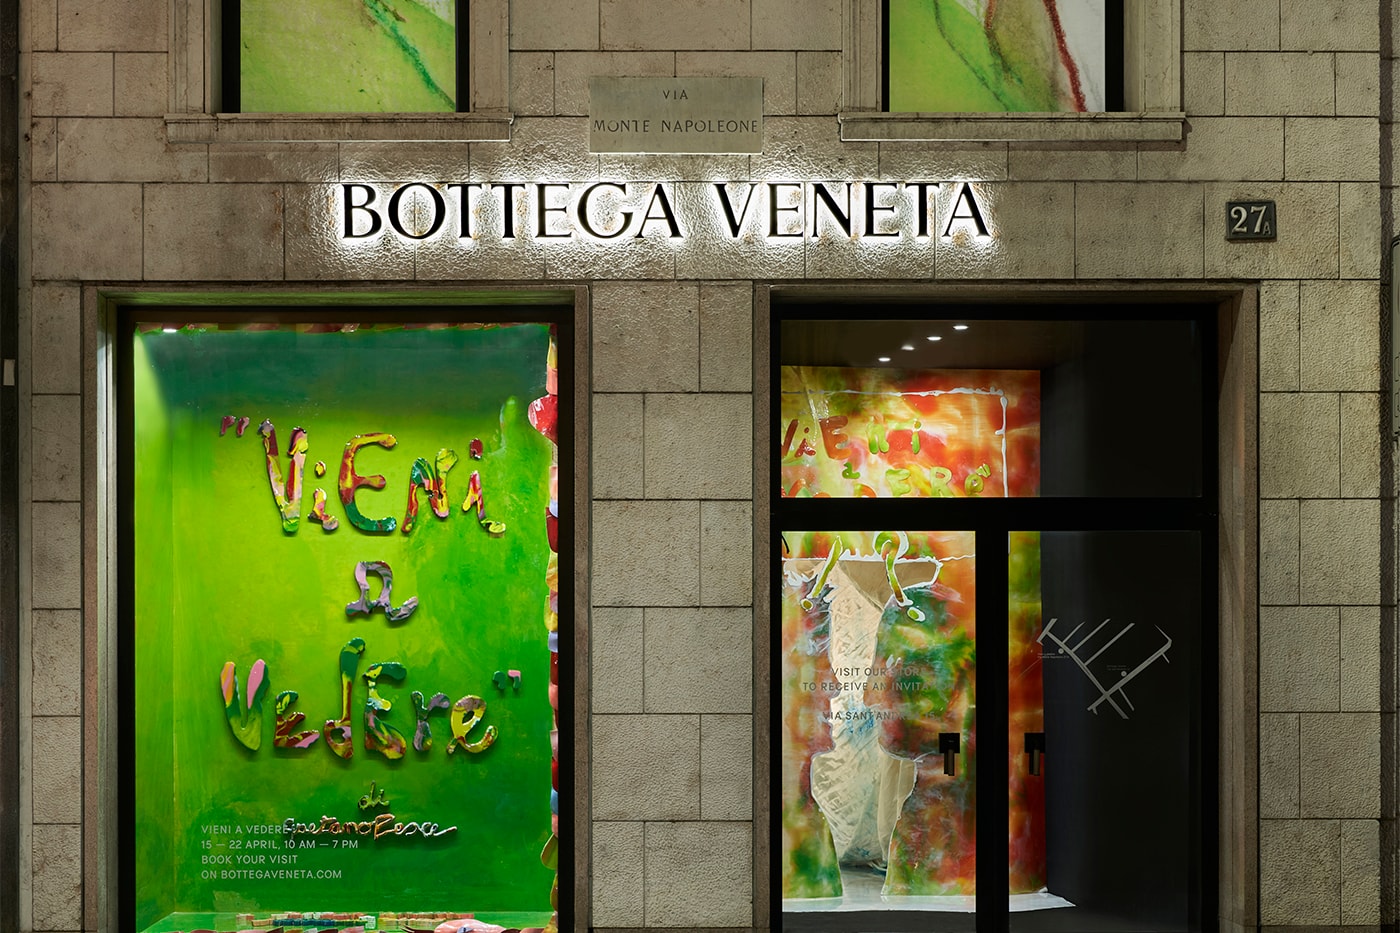 Tour Gaetano Pesce's "Vieni a Vedere" Installation at Bottega Veneta's Milan Store